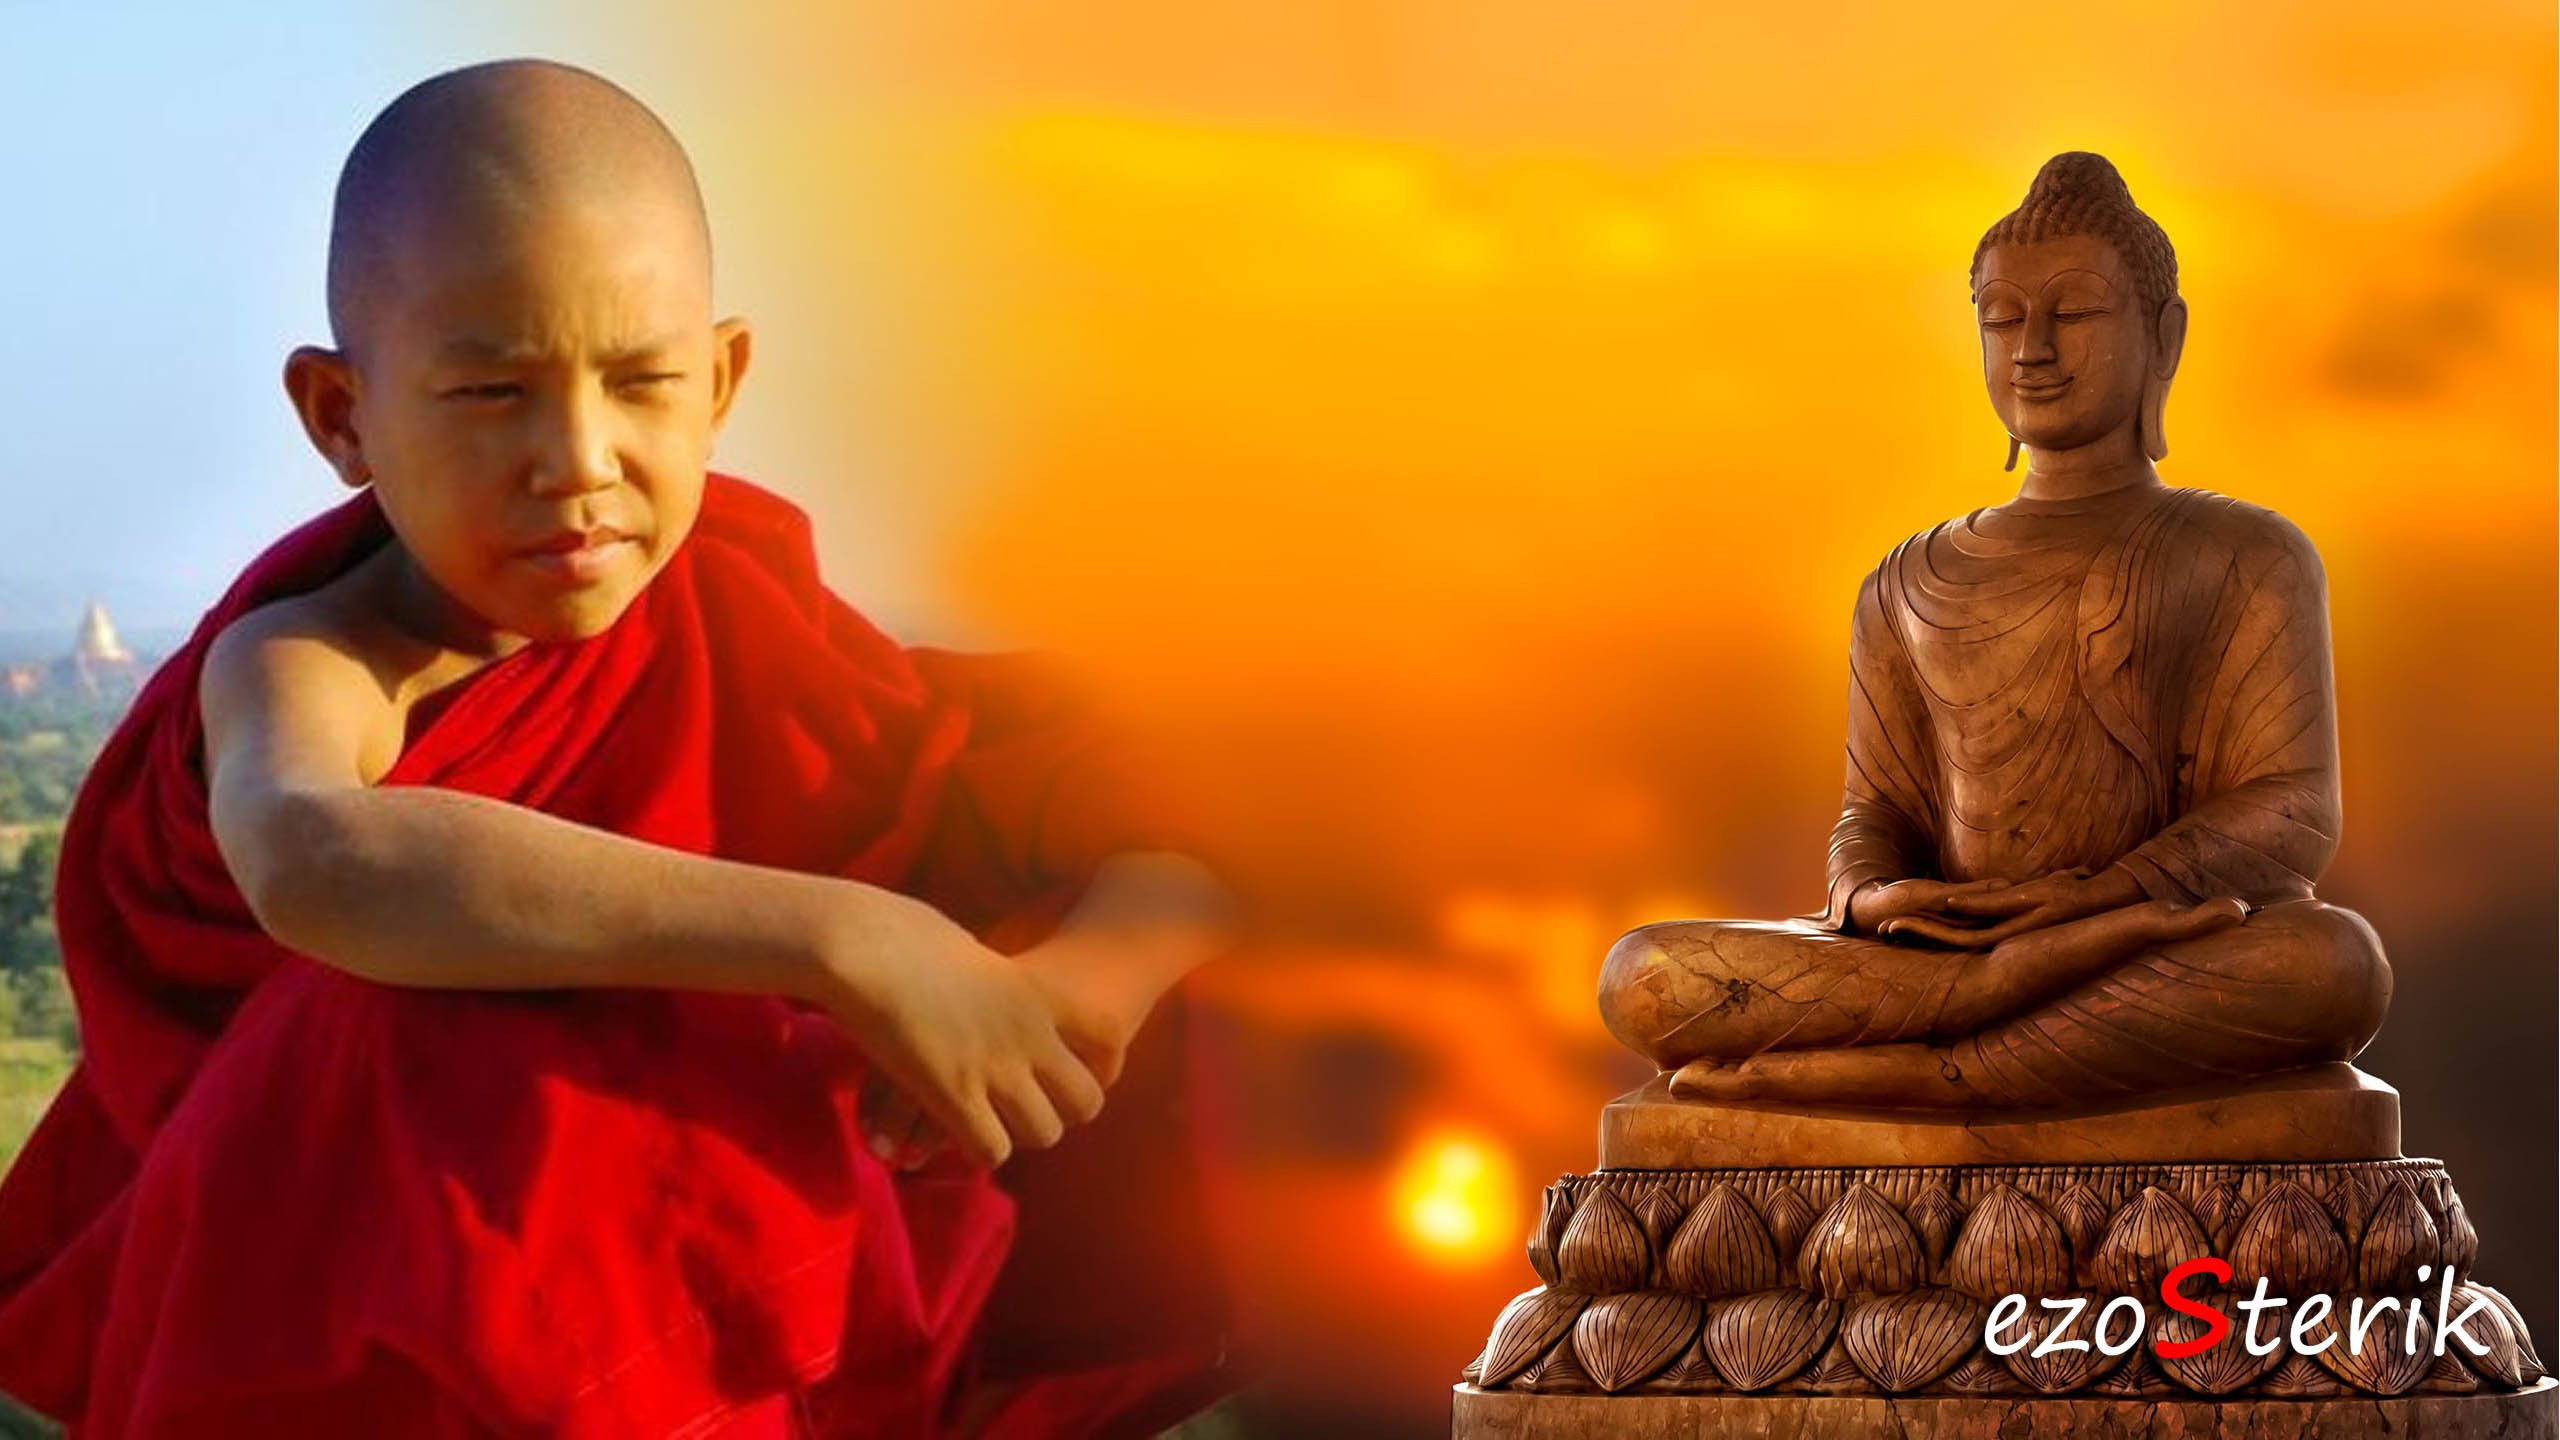 Буддисты это кто. Буддизм Тхеравада /хинаяна Будда. «Гаутама Будда, махаяна Будда». Дуйсэн удэр. Будда дхарма Сангха.